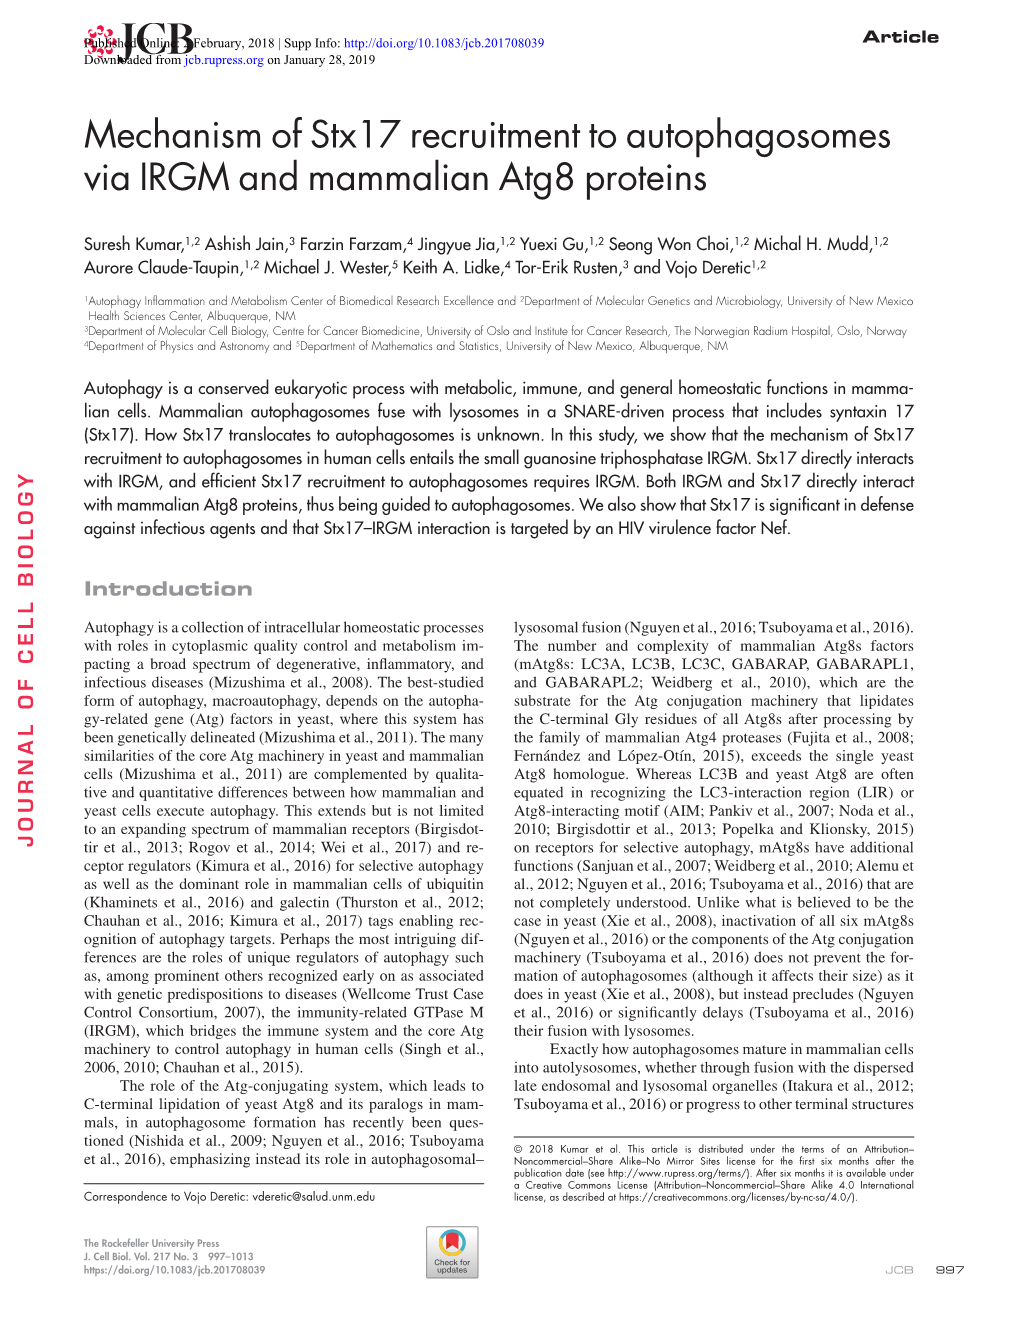 Mechanism of Stx17 Recruitment to Autophagosomes Via IRGM and Mammalian Atg8 Proteins